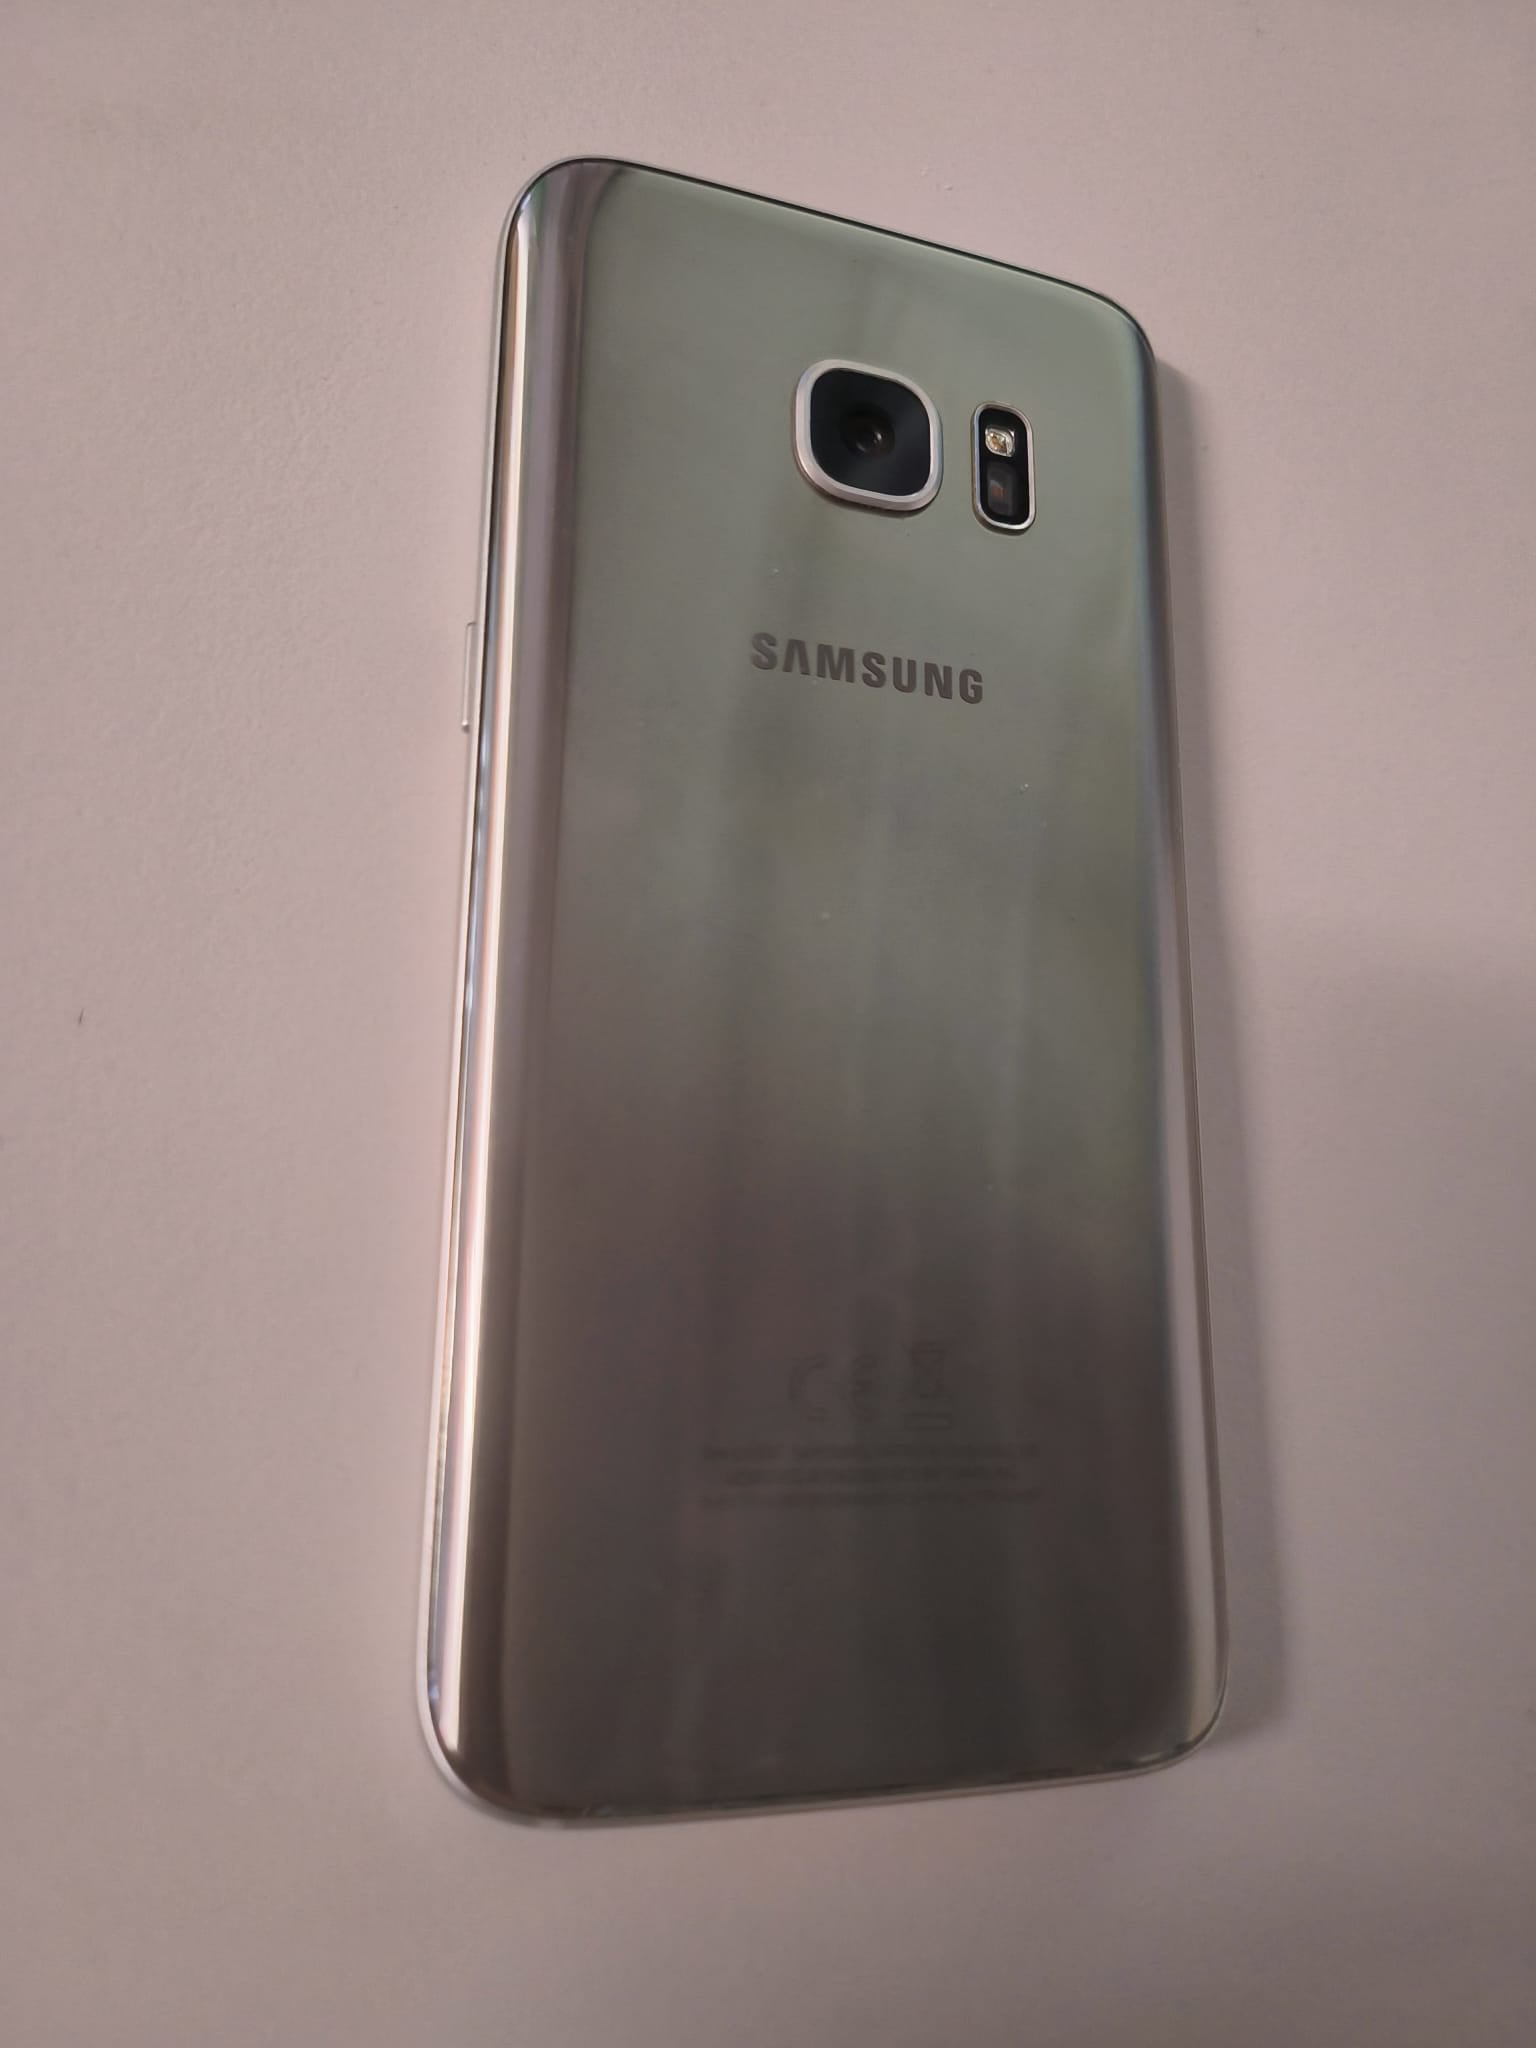 Samsung Galaxy S7 3000mAh Akku 32GB/4GB Silber (Swisscom Branding ) (Gebrauchtgerät)